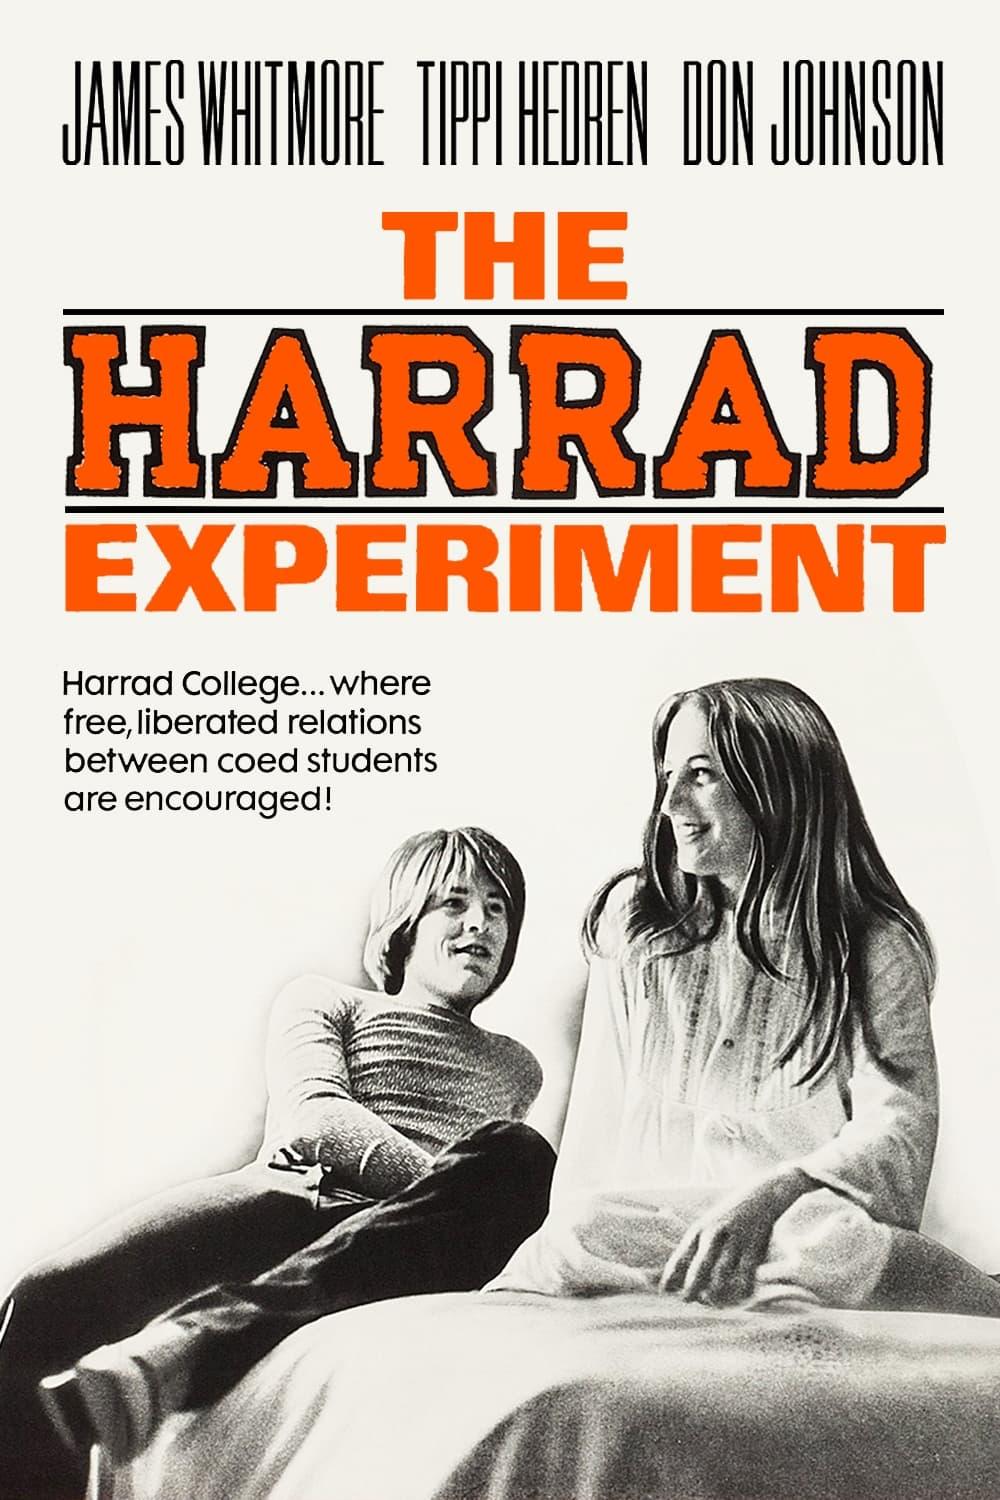 The Harrad Experiment poster